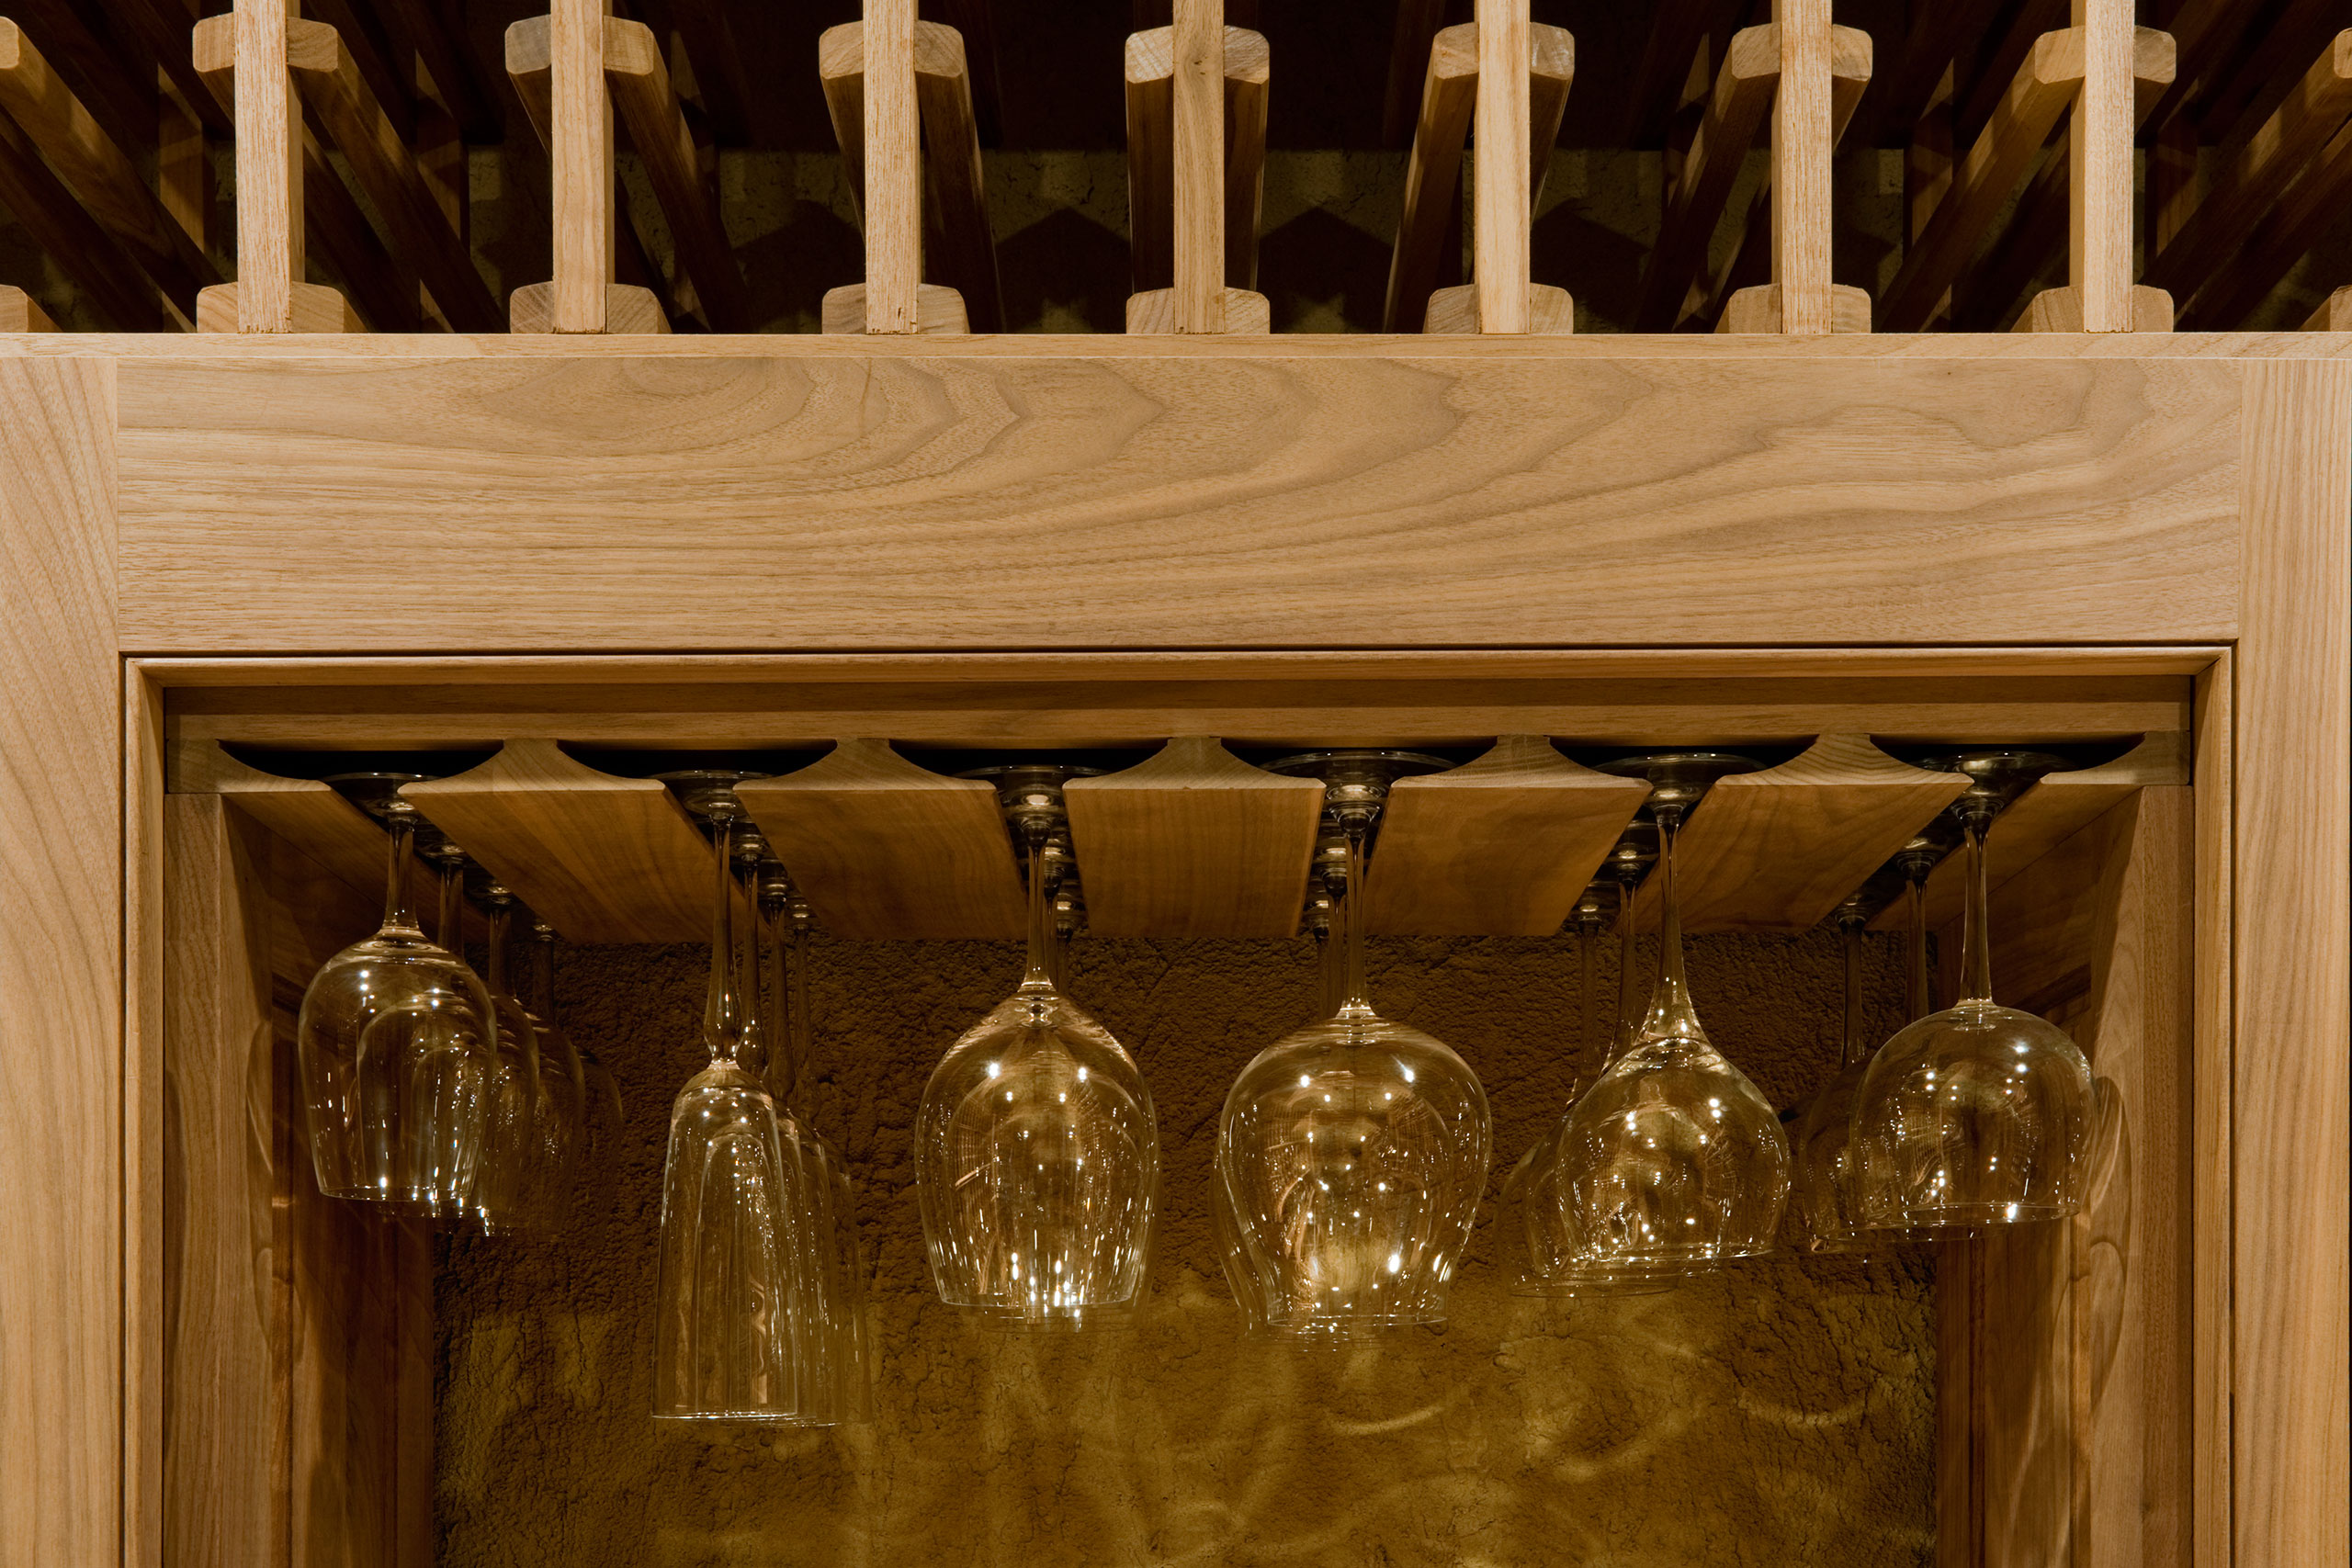 Functional and elegant custom glassware display in wine cellar.  - Glenview Haus - Custom Doors, Wine Cellars and Cabinets in Chicago